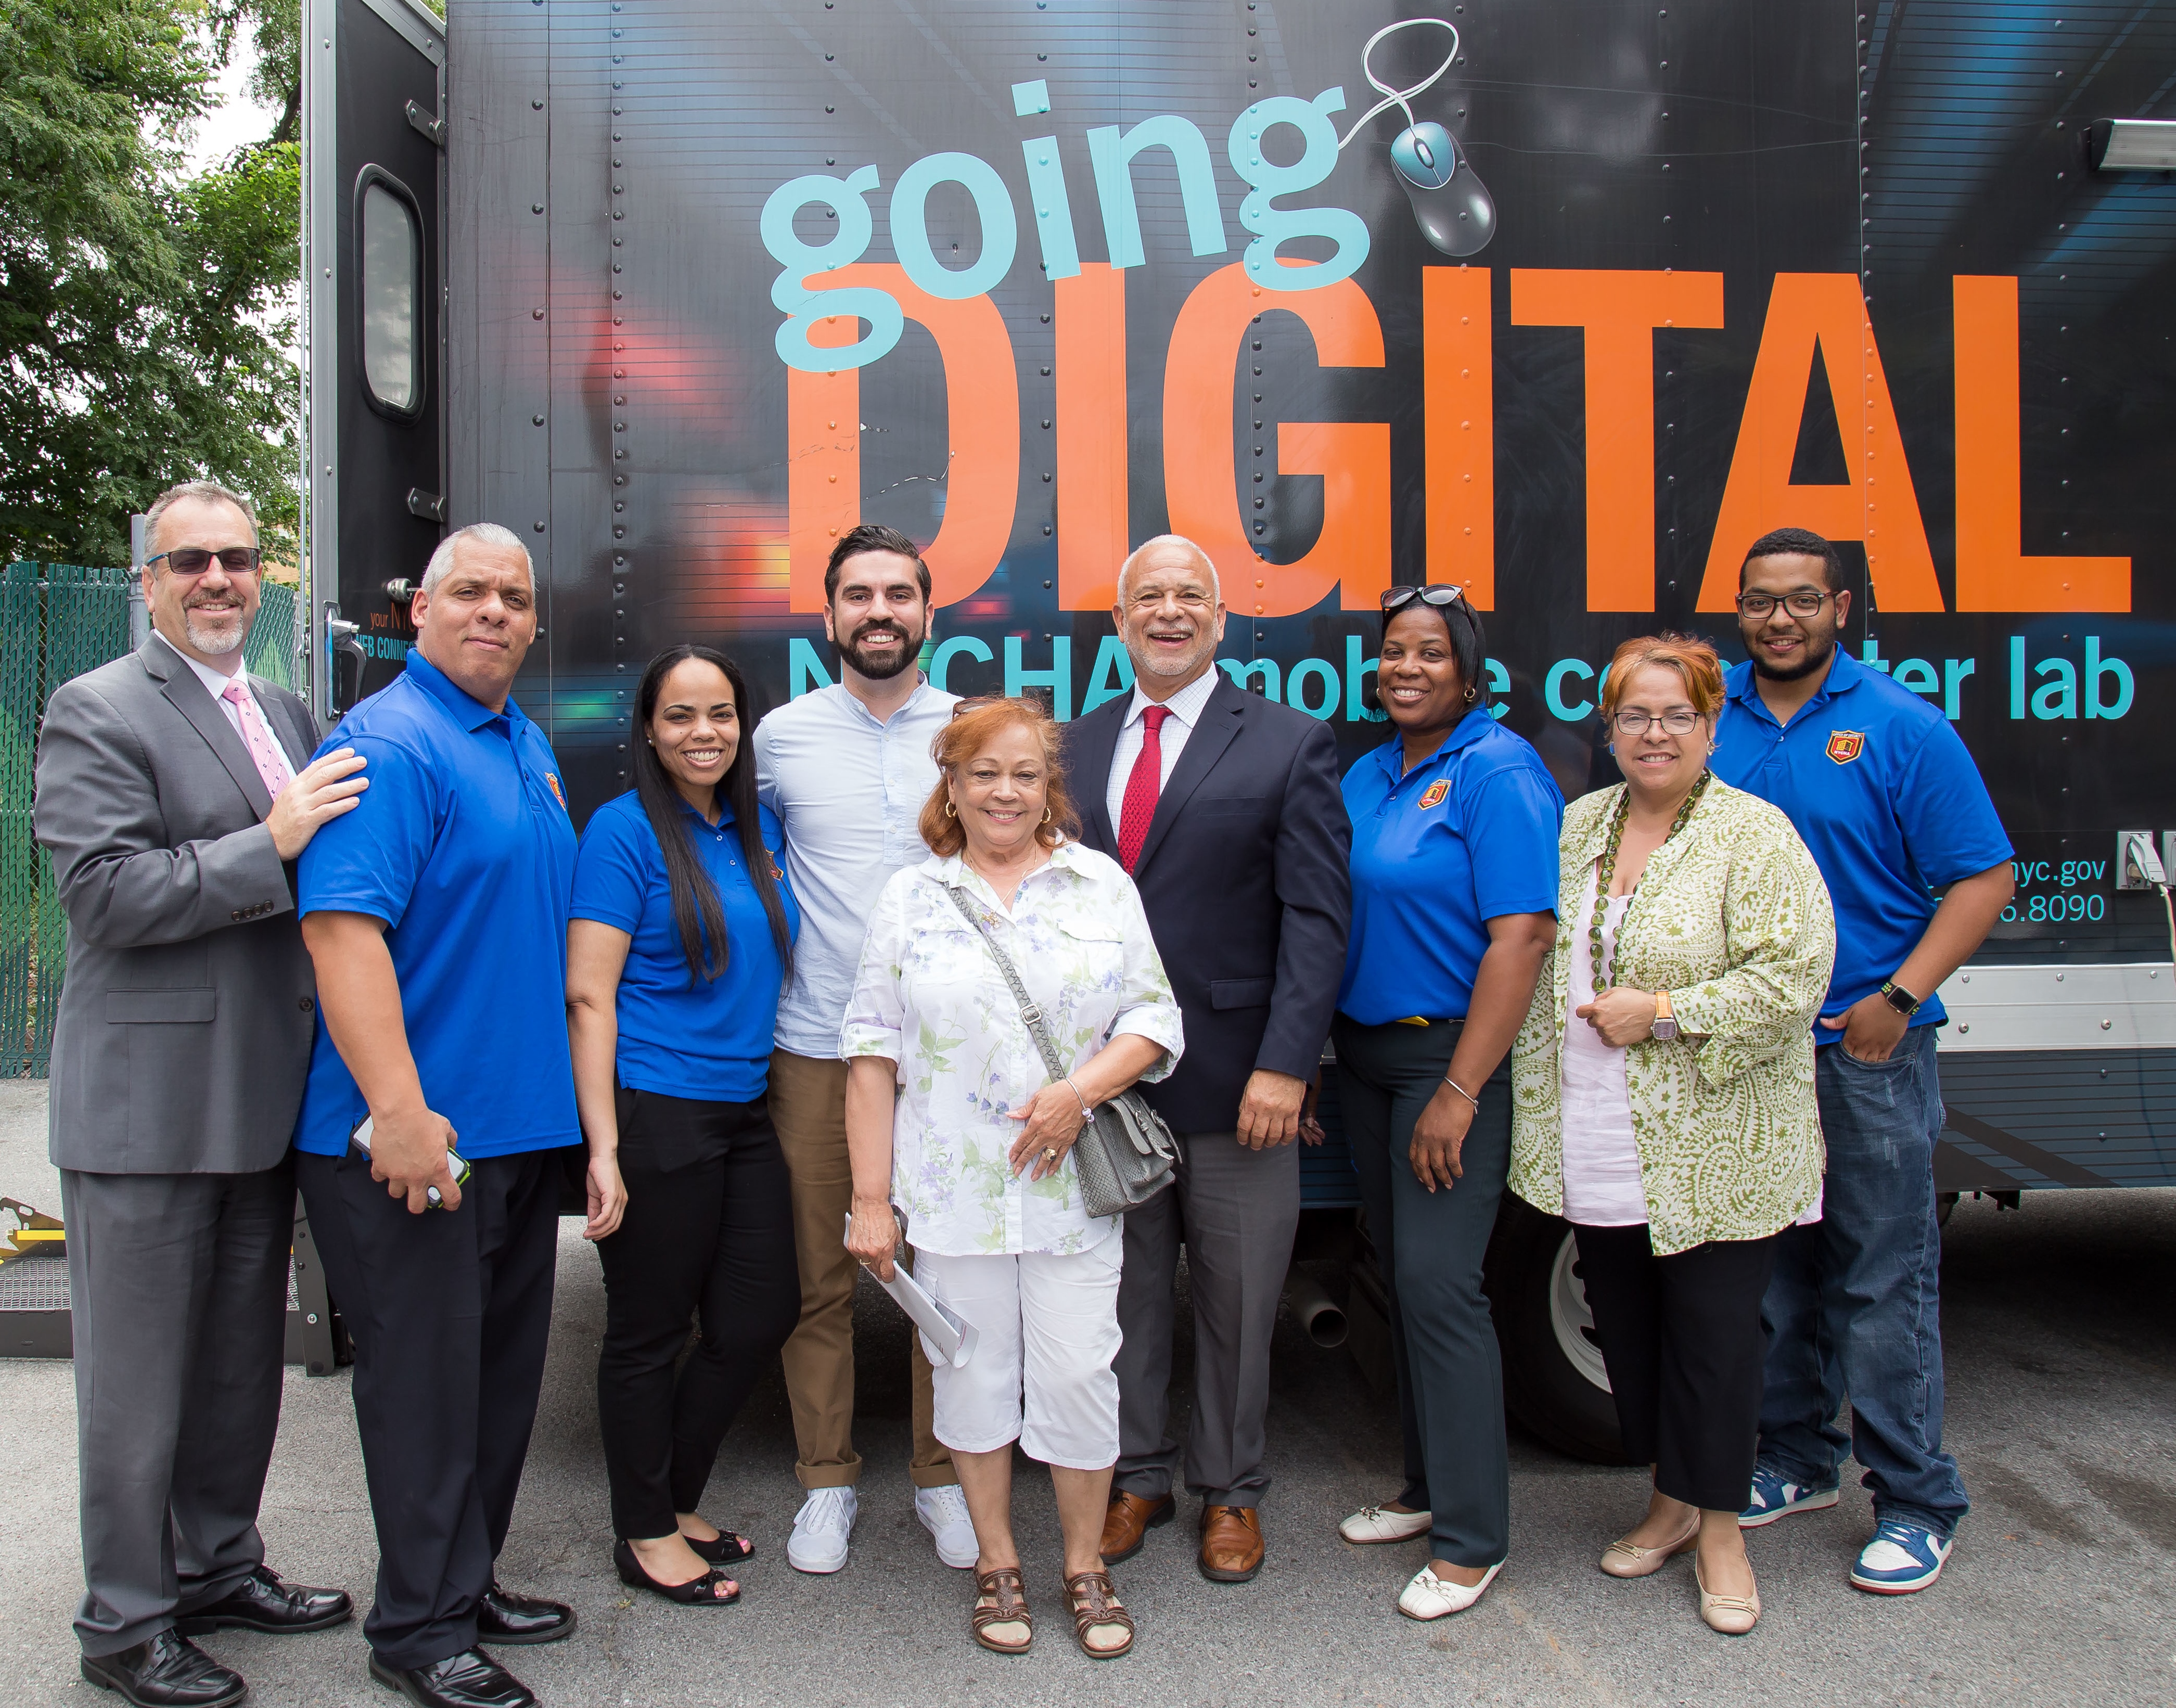 NYCHA Digital Van and staff